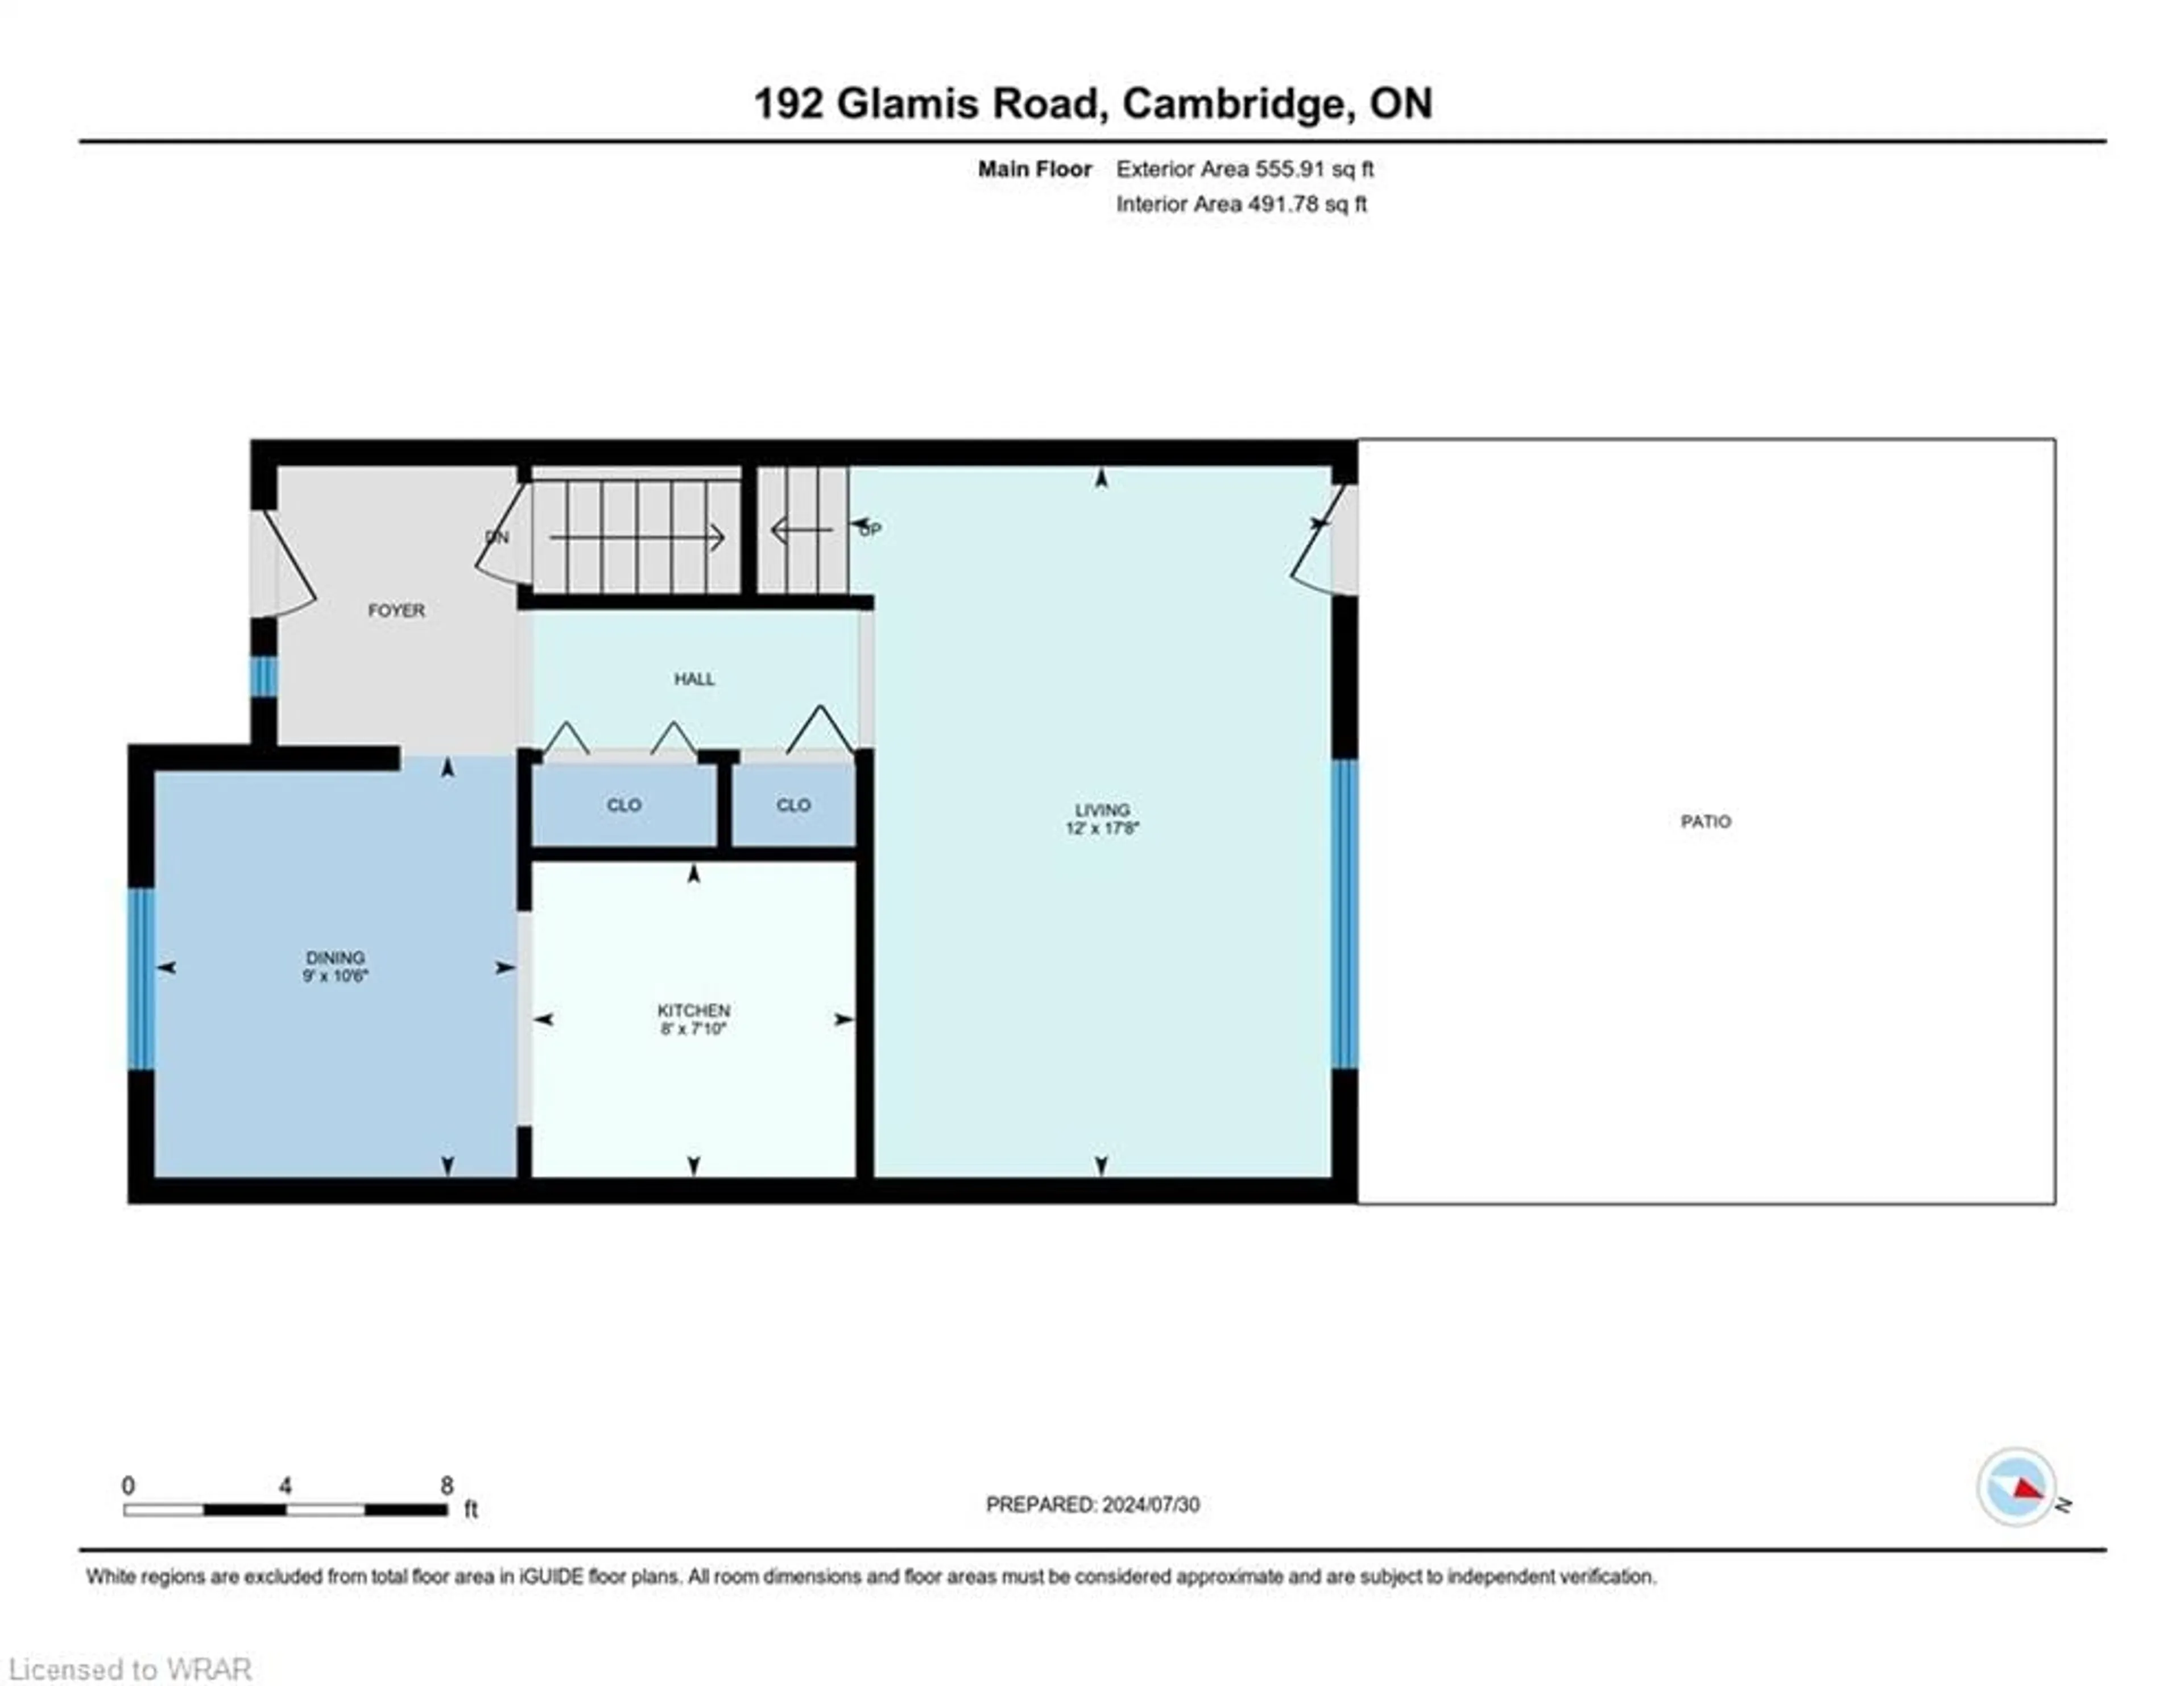 Floor plan for 192 Glamis Rd, Cambridge Ontario N1R 6T2